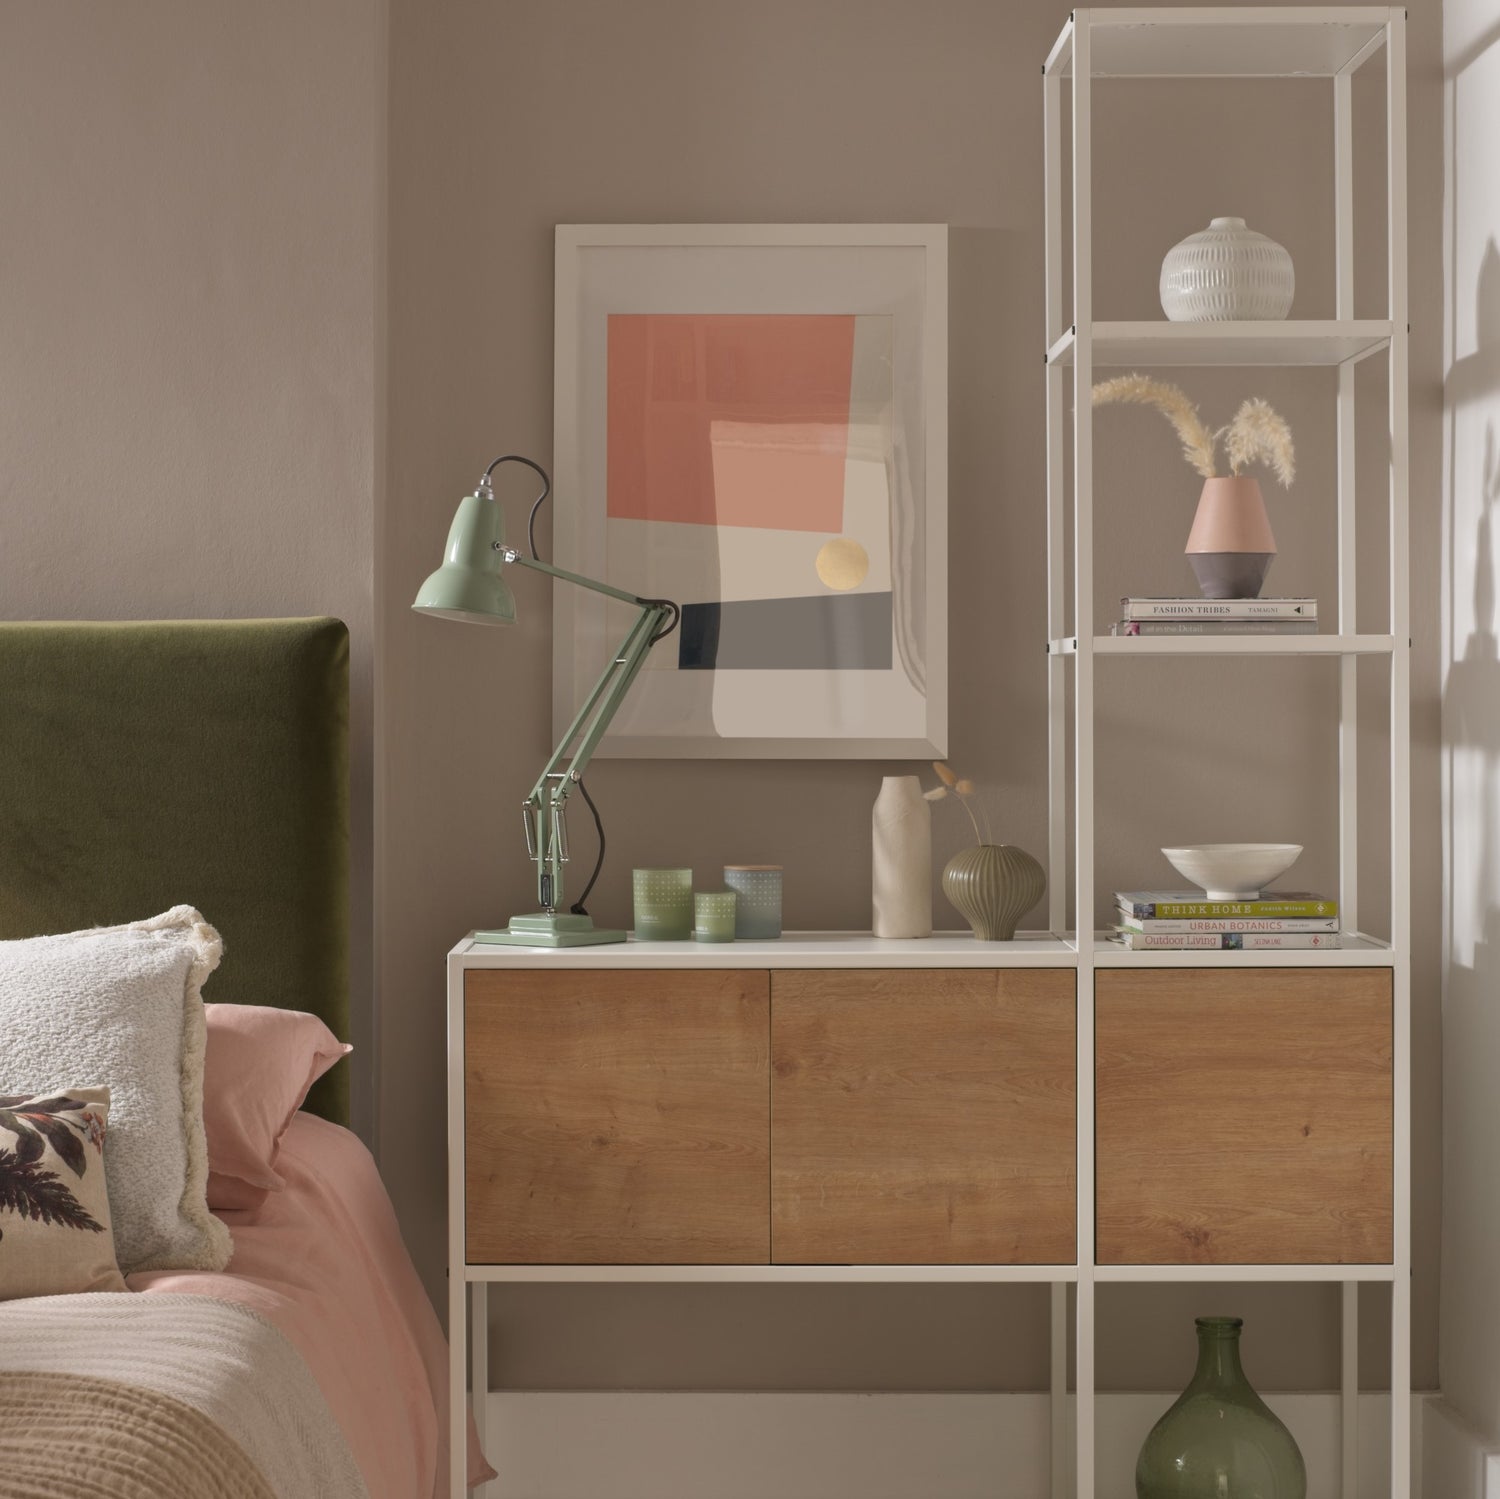 Your Bedroom Storage: Making Furniture Adapt